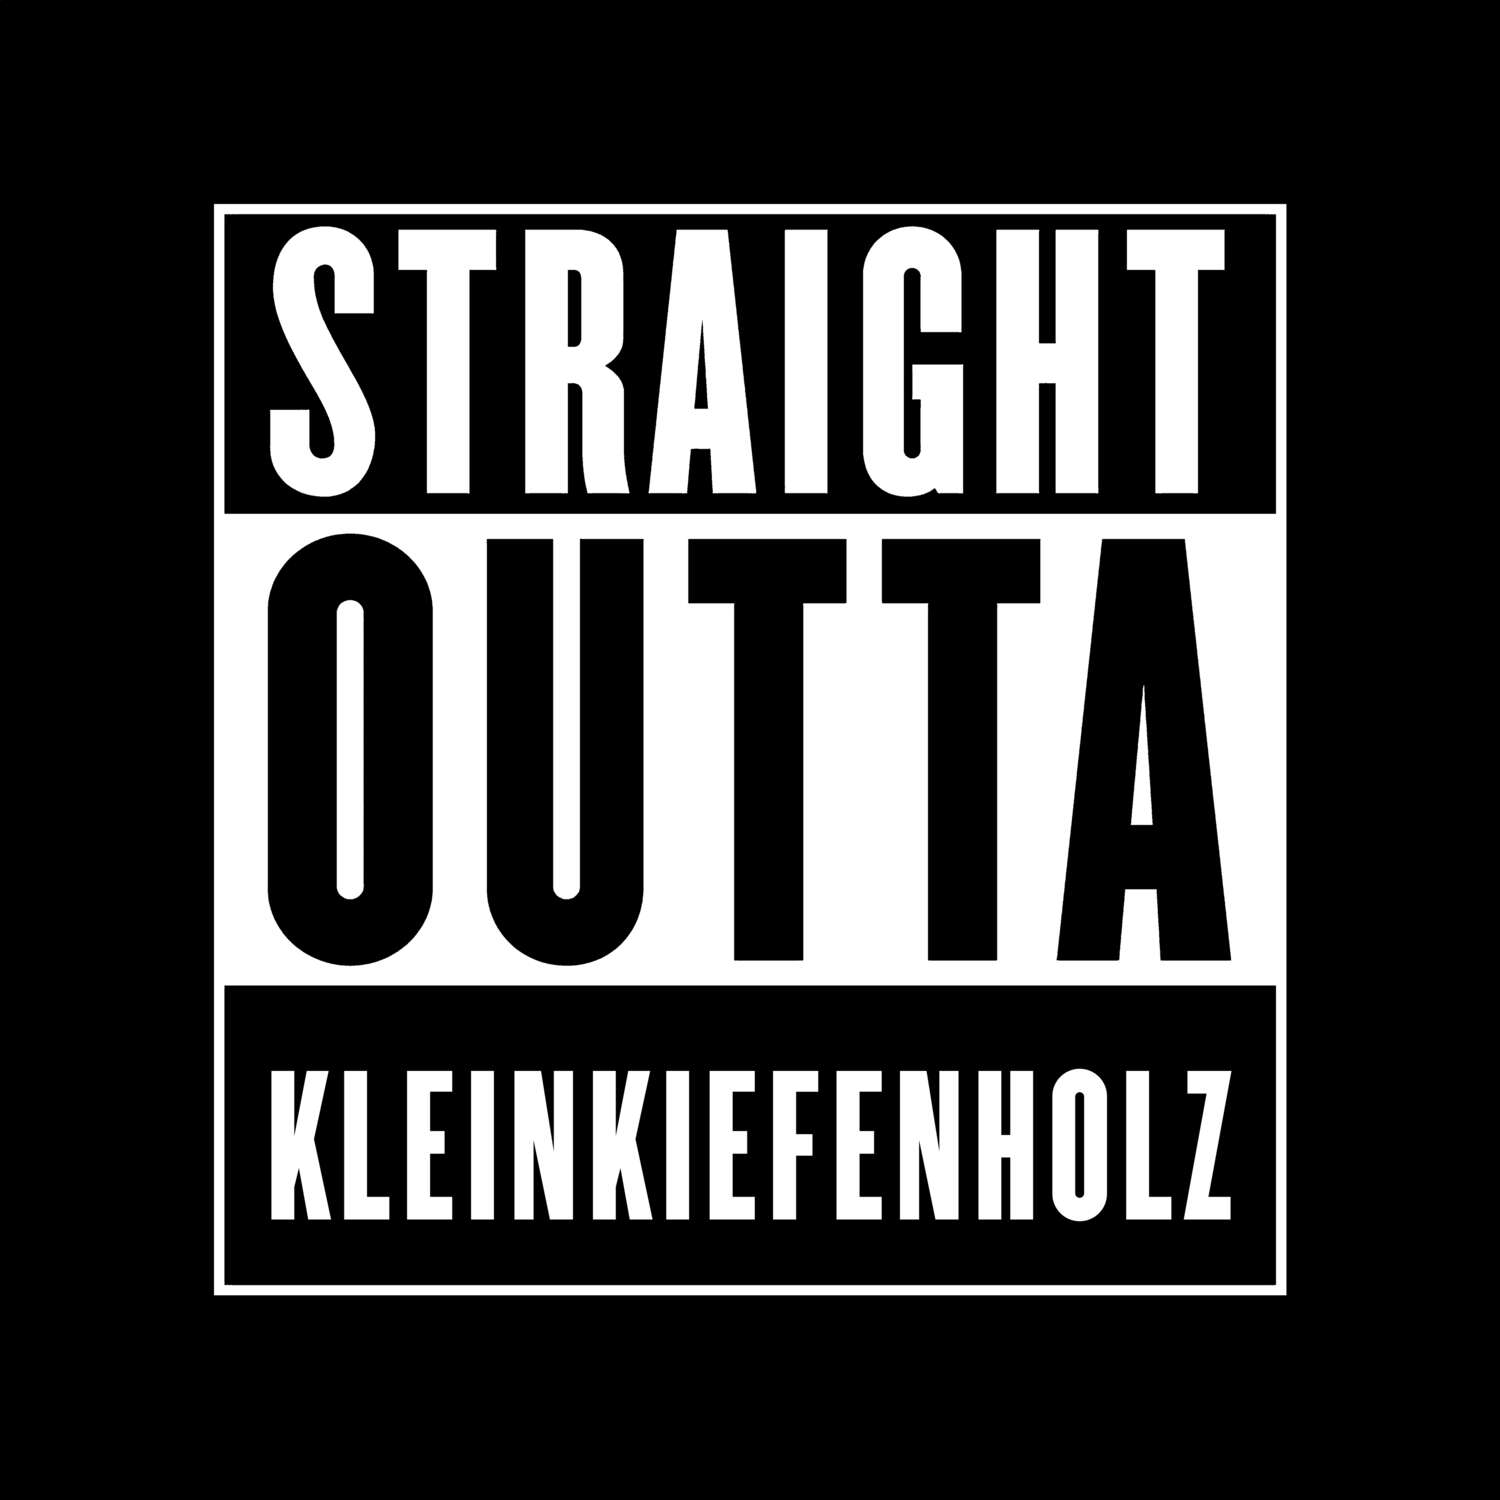 Kleinkiefenholz T-Shirt »Straight Outta«